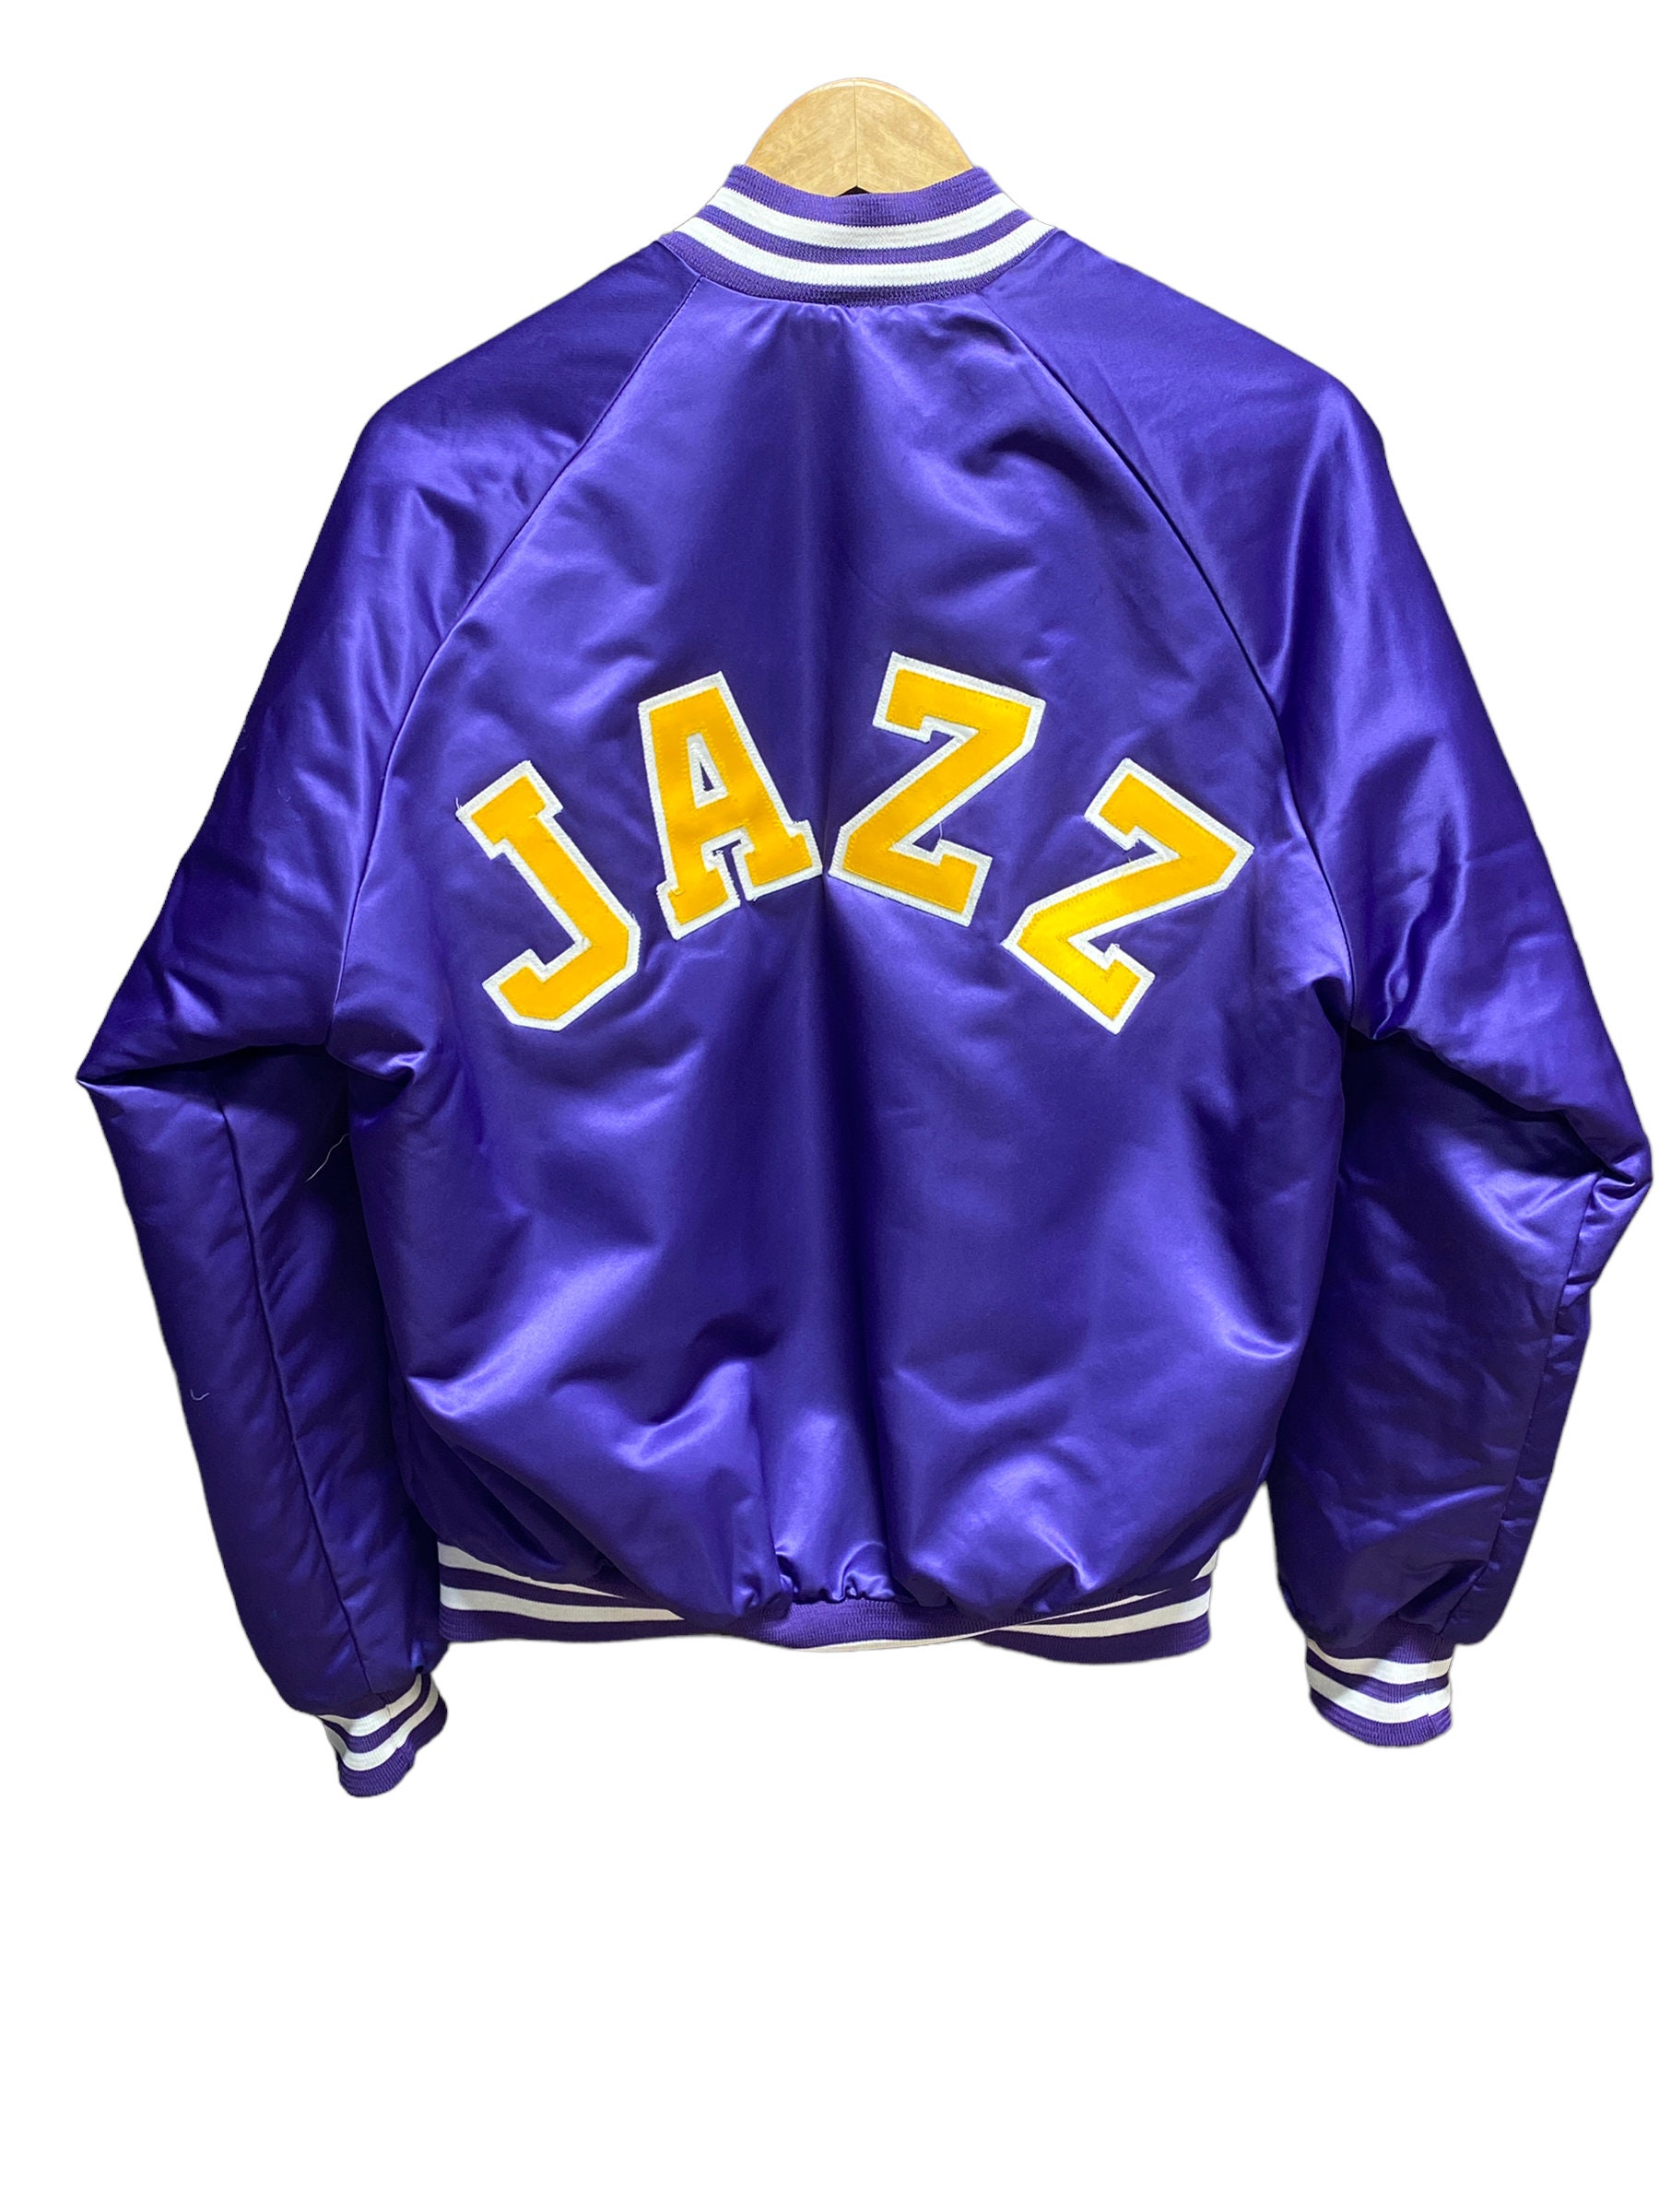 Vintage Utah Jazz Basketbal Jacket Size XL